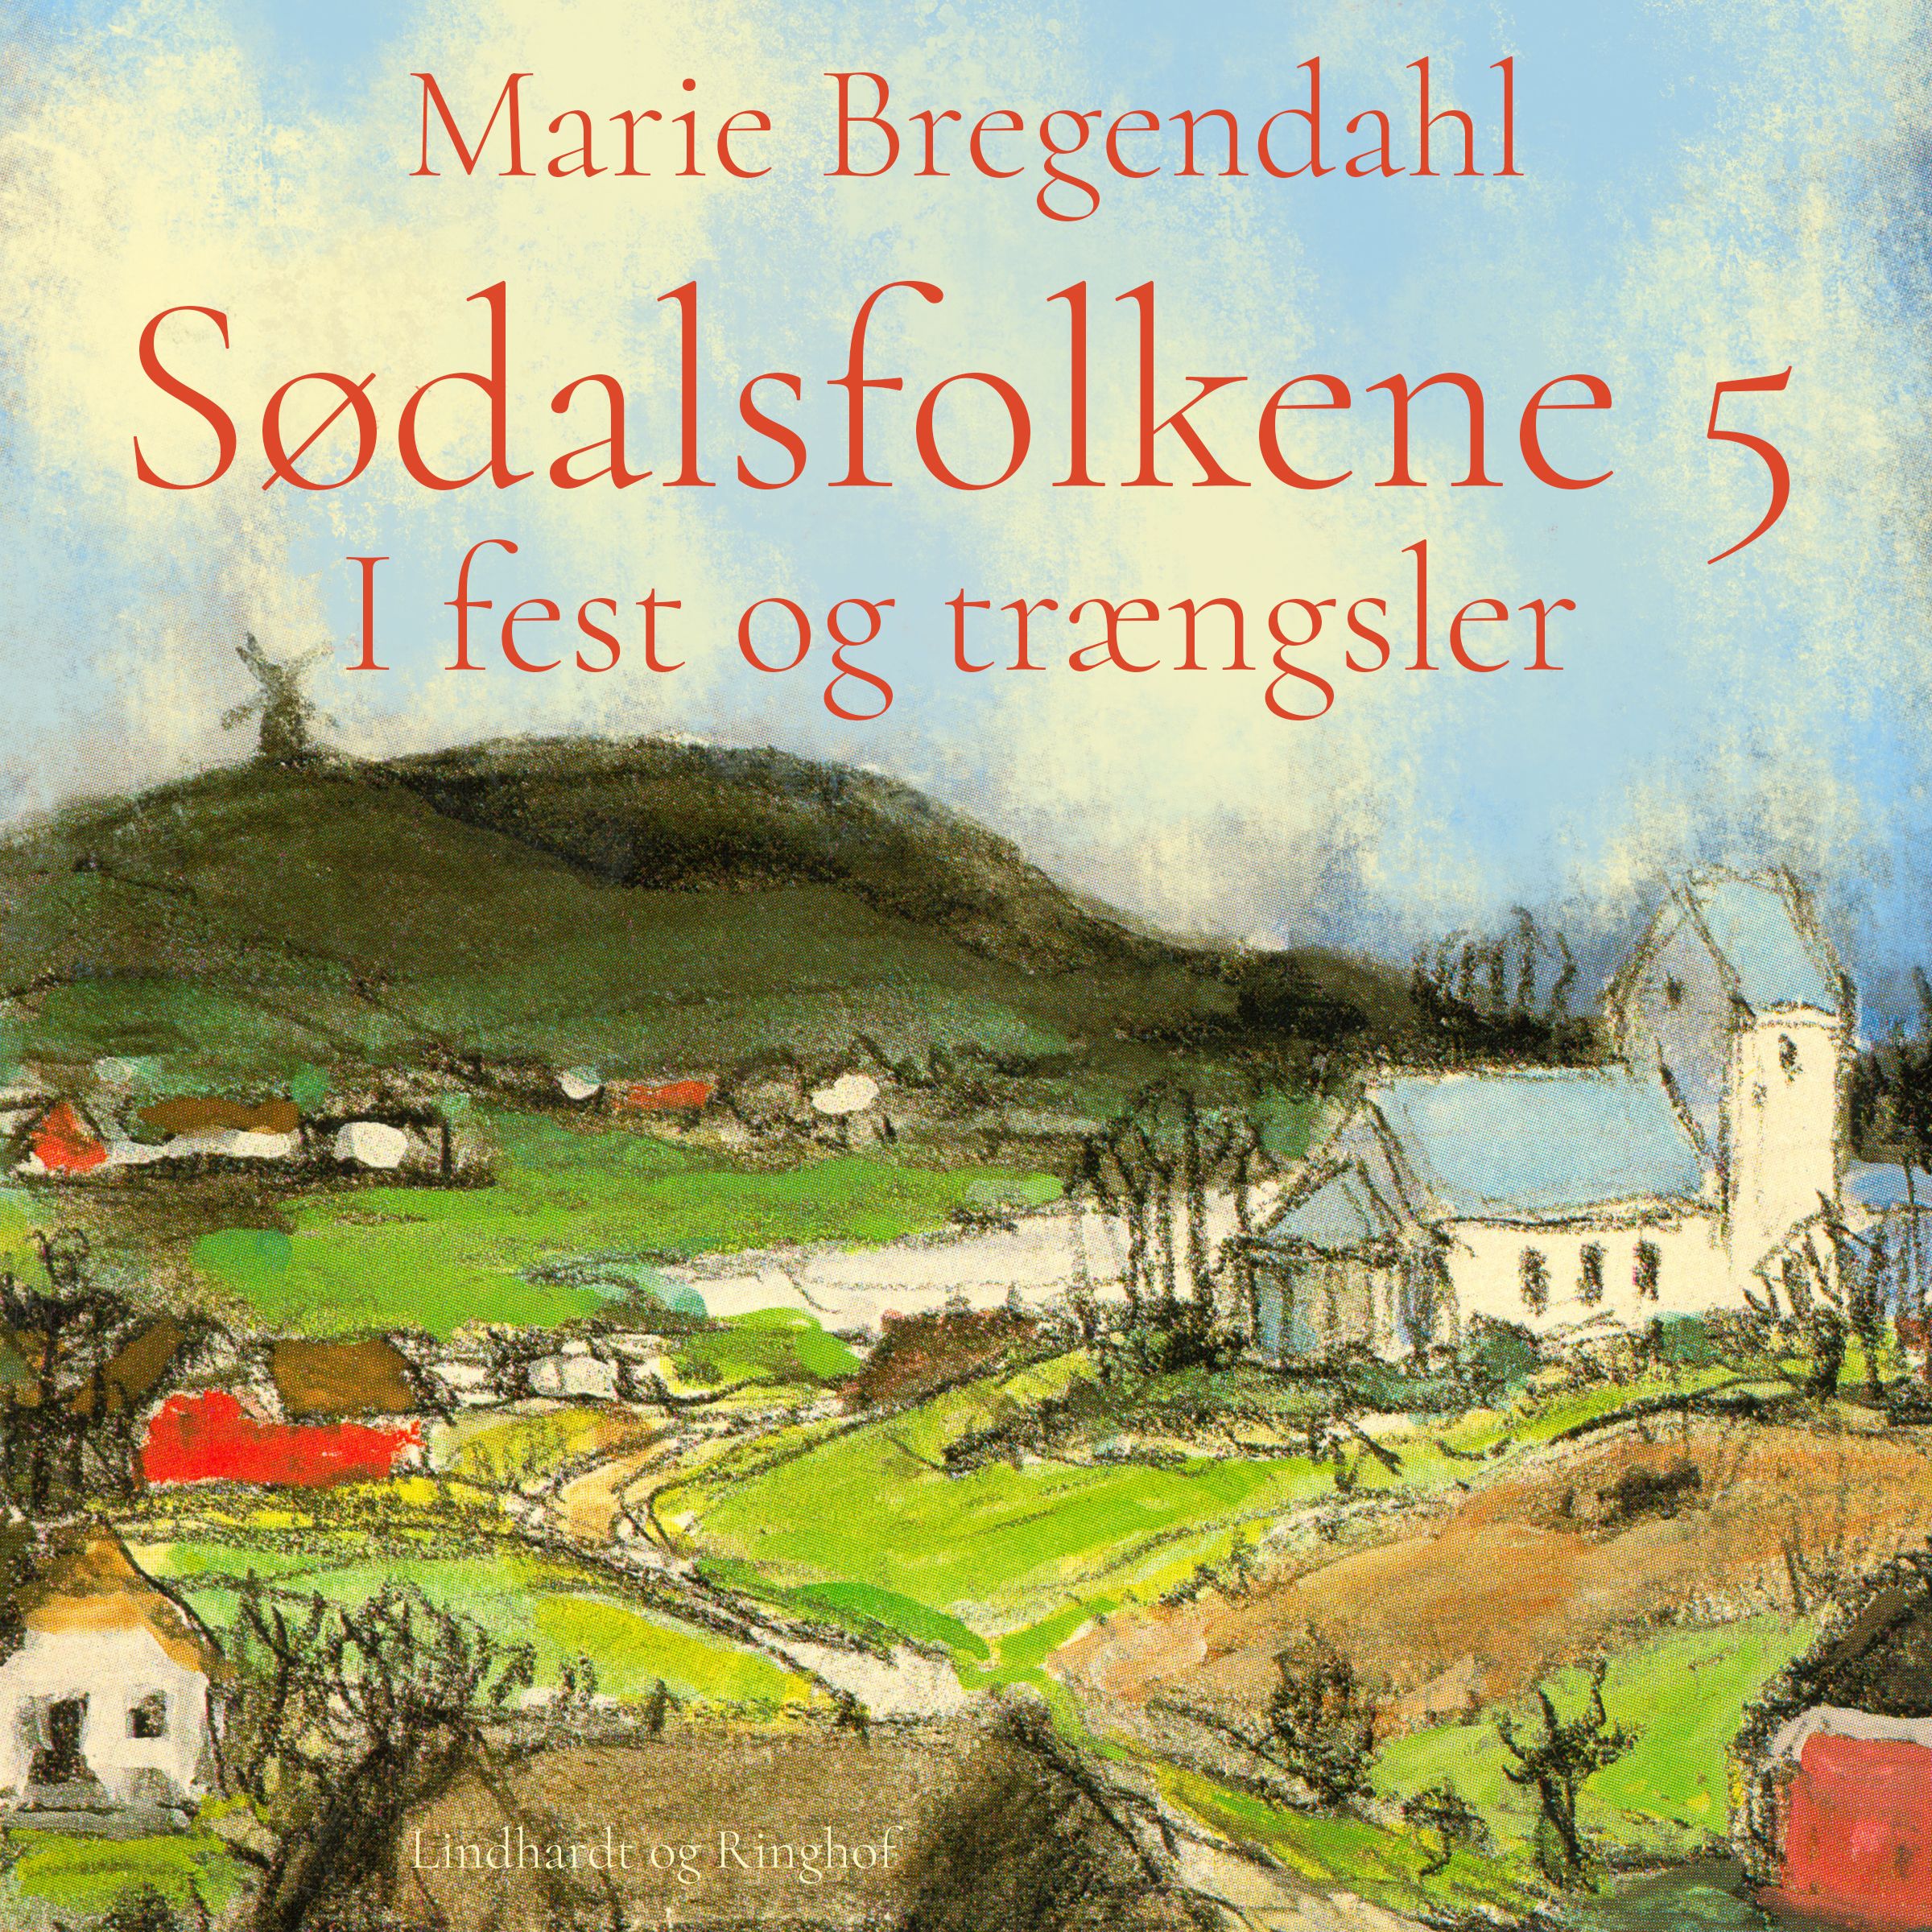 Sødalsfolkene - I fest og trængsler, audiobook by Marie Bregendahl